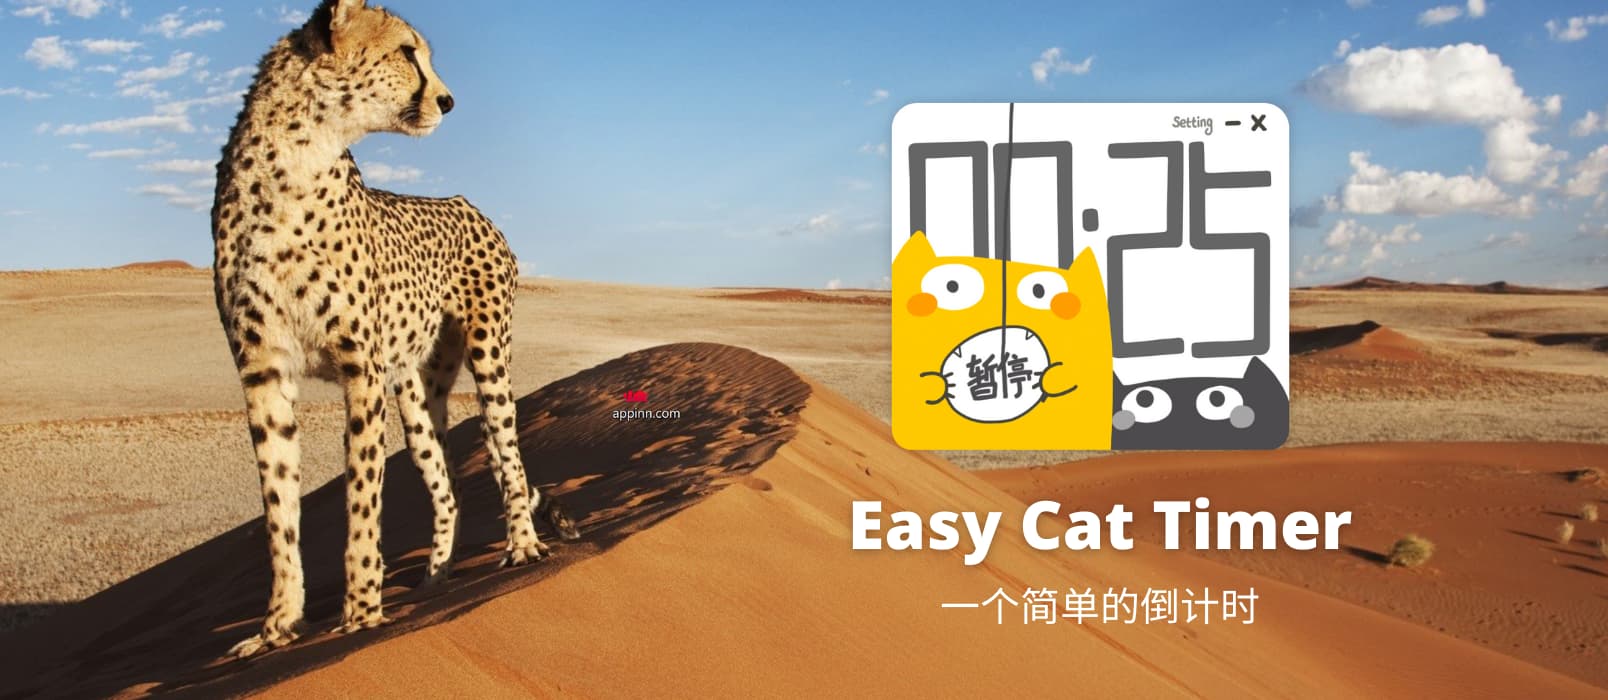 Easy Cat Timer - 简单的倒计时工具，2 只猫咪，爱不释手[Windows]